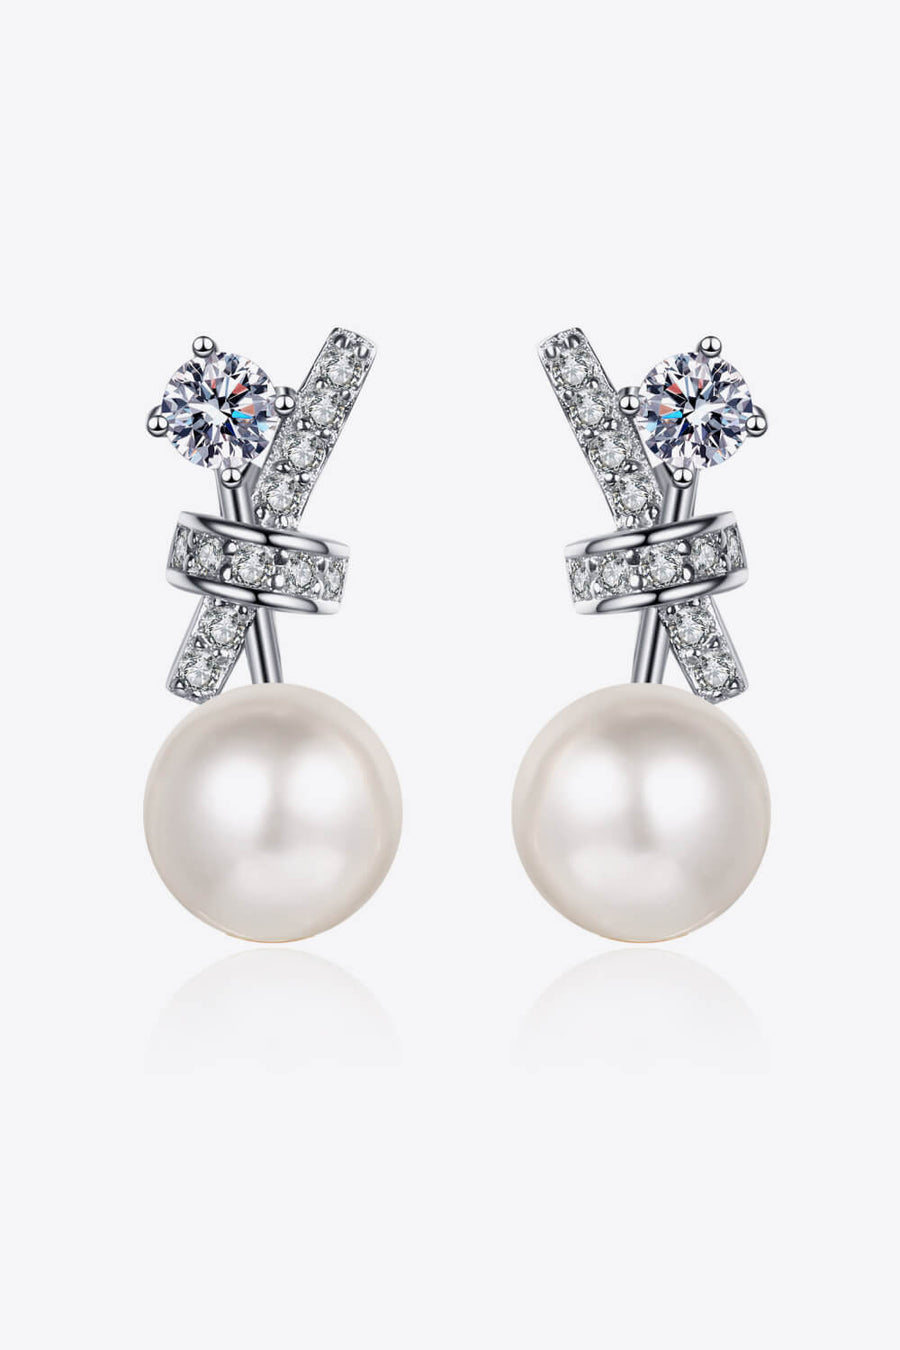 Best Diamond Pearl Stud Earrings Jewelry Gifts for Women | 0.72 Carat Diamond with Pearl Stud Earrings | MASON New York